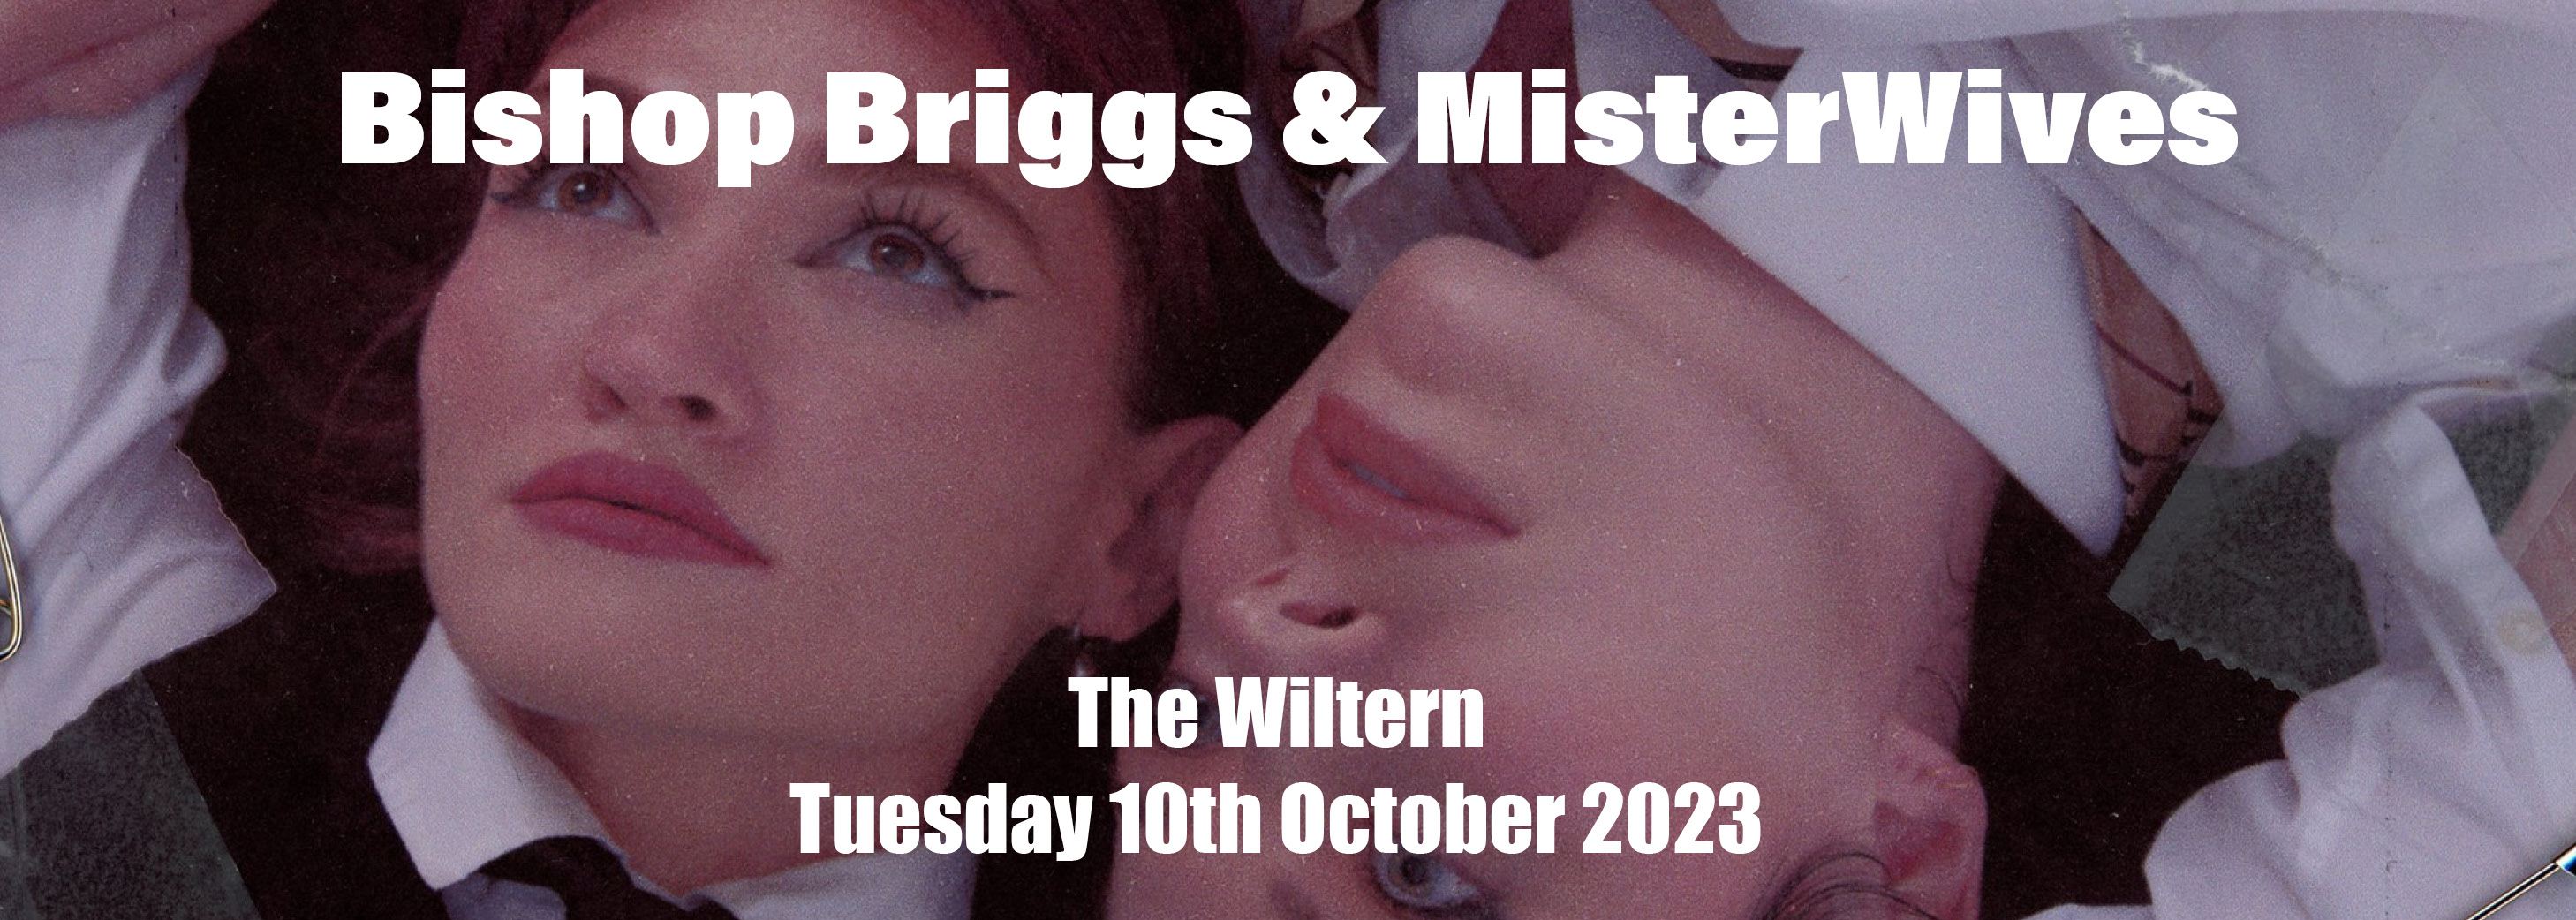 Bishop Briggs & MisterWives at The Wiltern